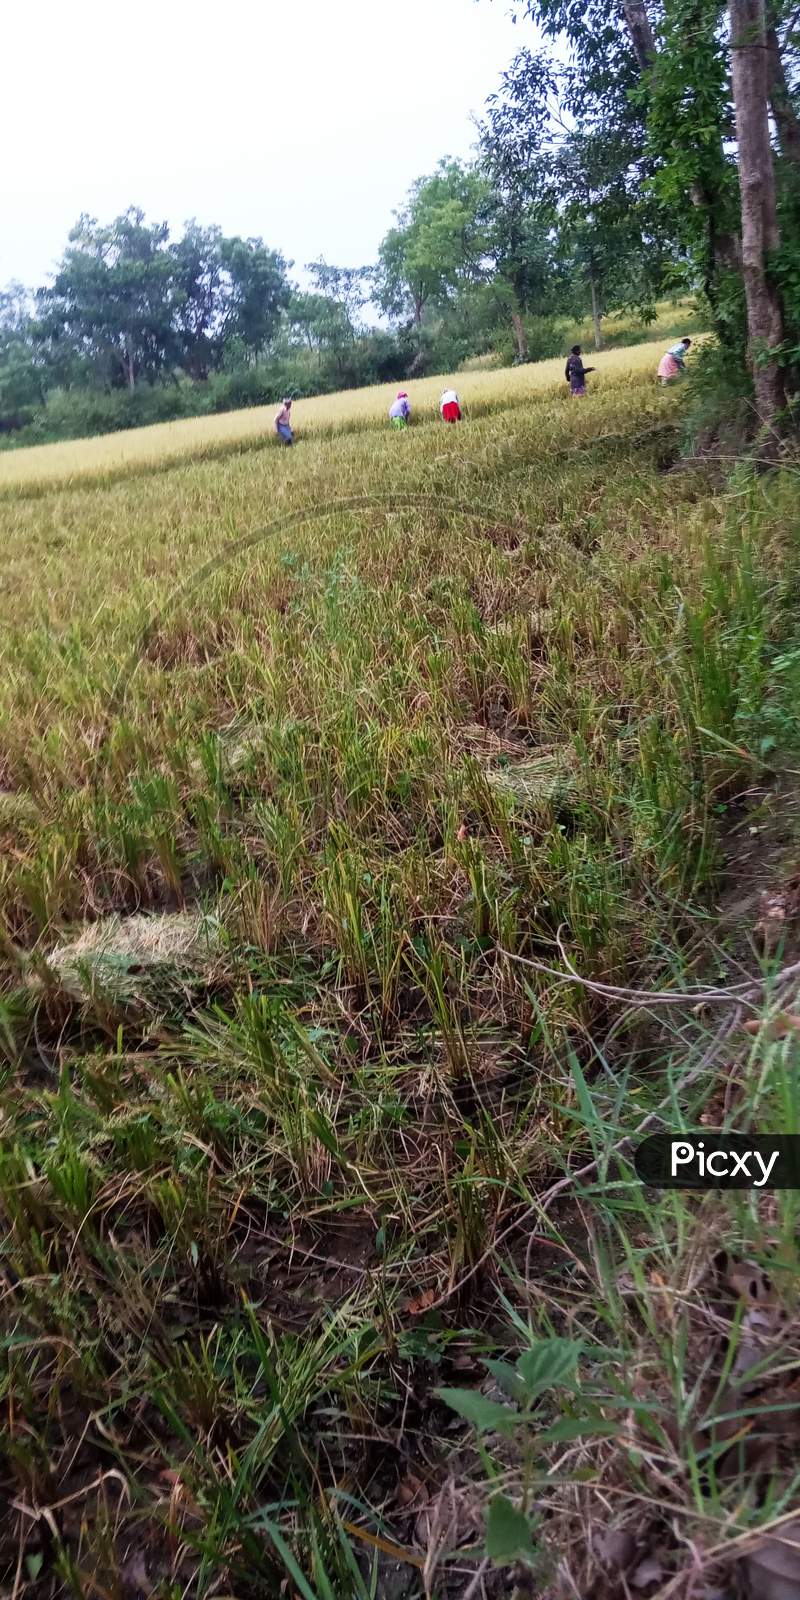 India rice crops harvesting farmers green field summer season paddy